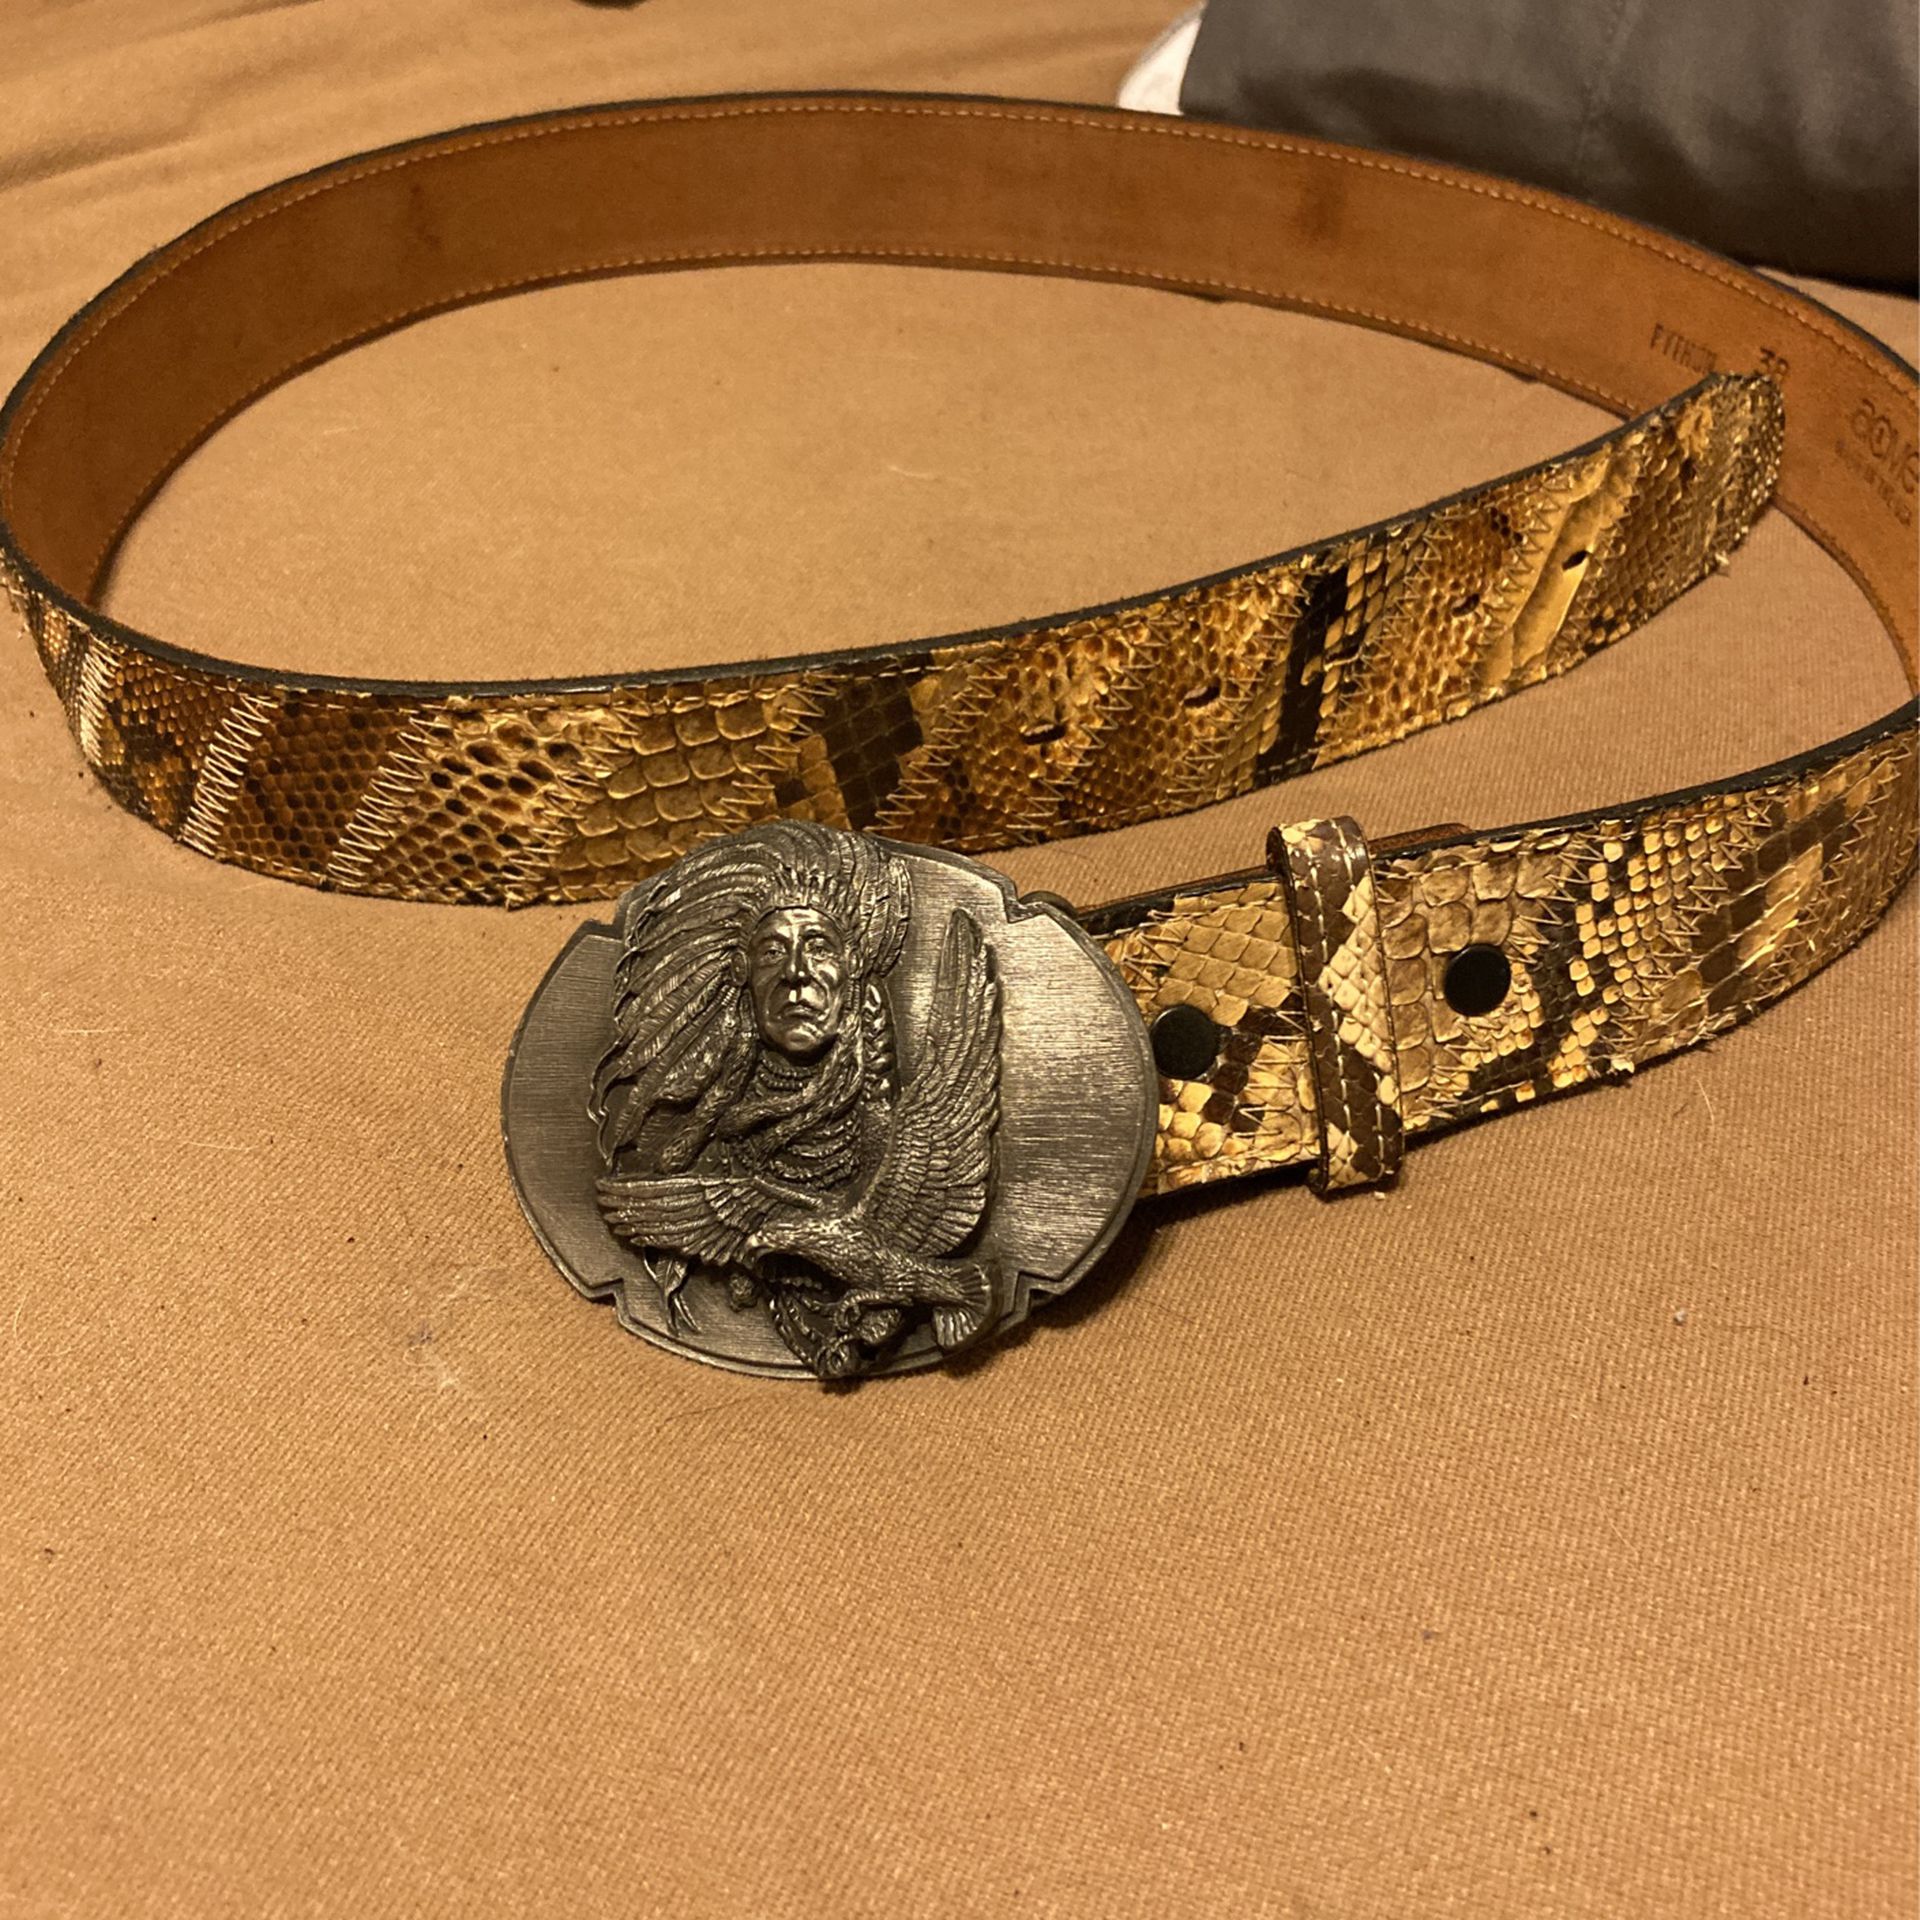 Genuine Leather Python Snakeskin Belt Size 38